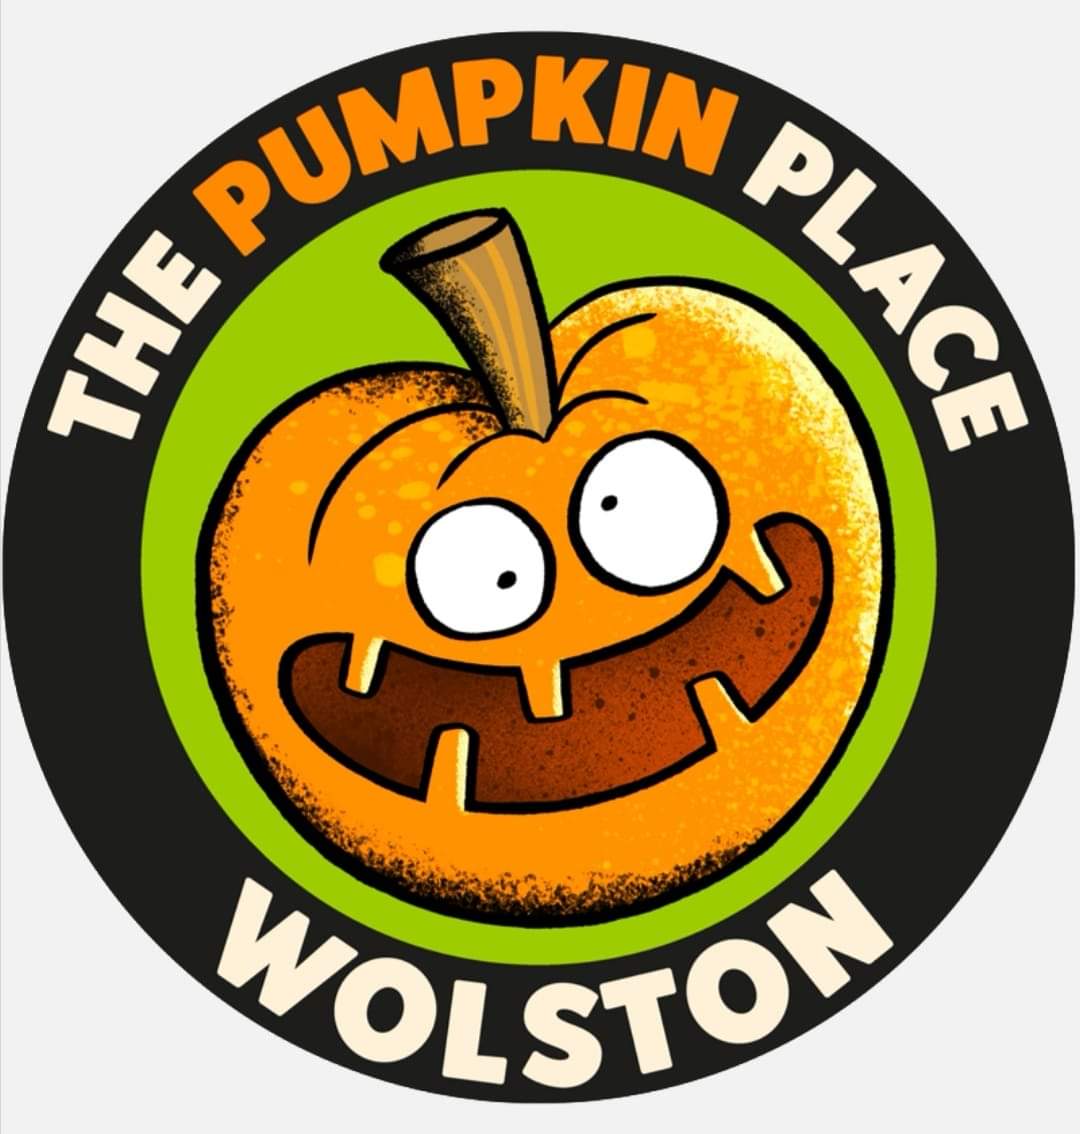 The Pumpkin Place Wolston's logo